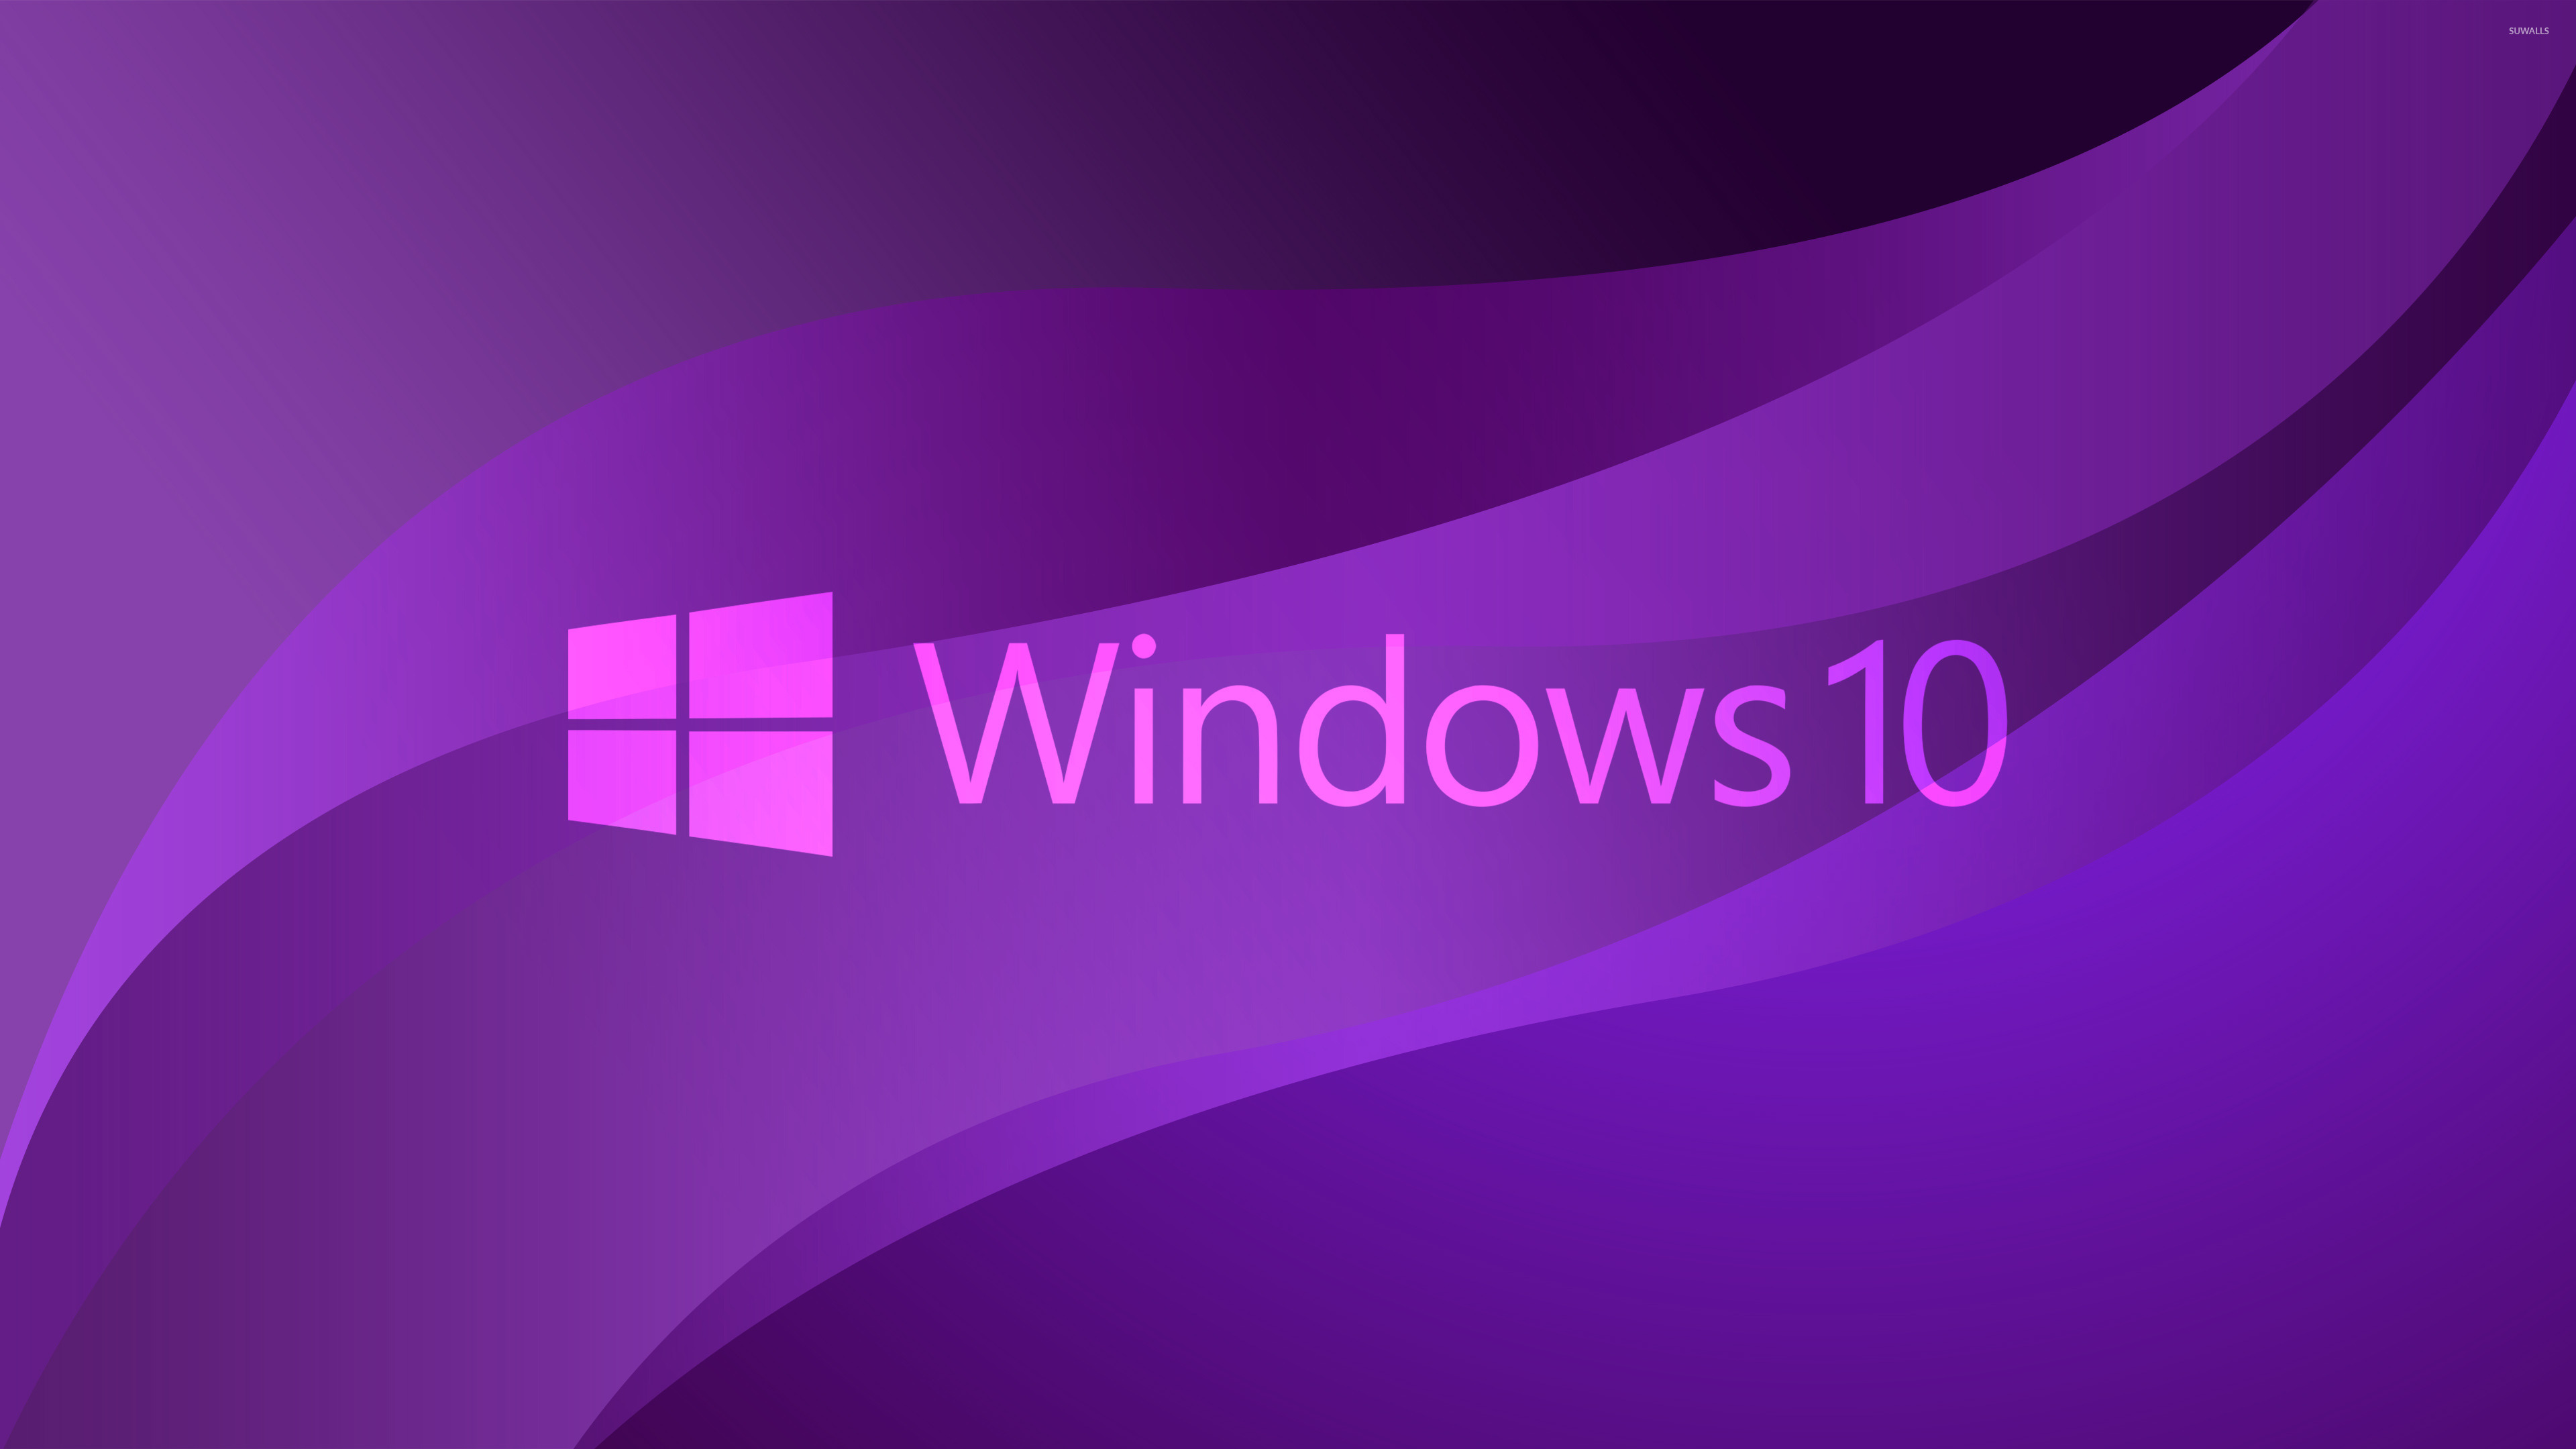 Windows 10 transparent text logo on purple wallpaper   Computer